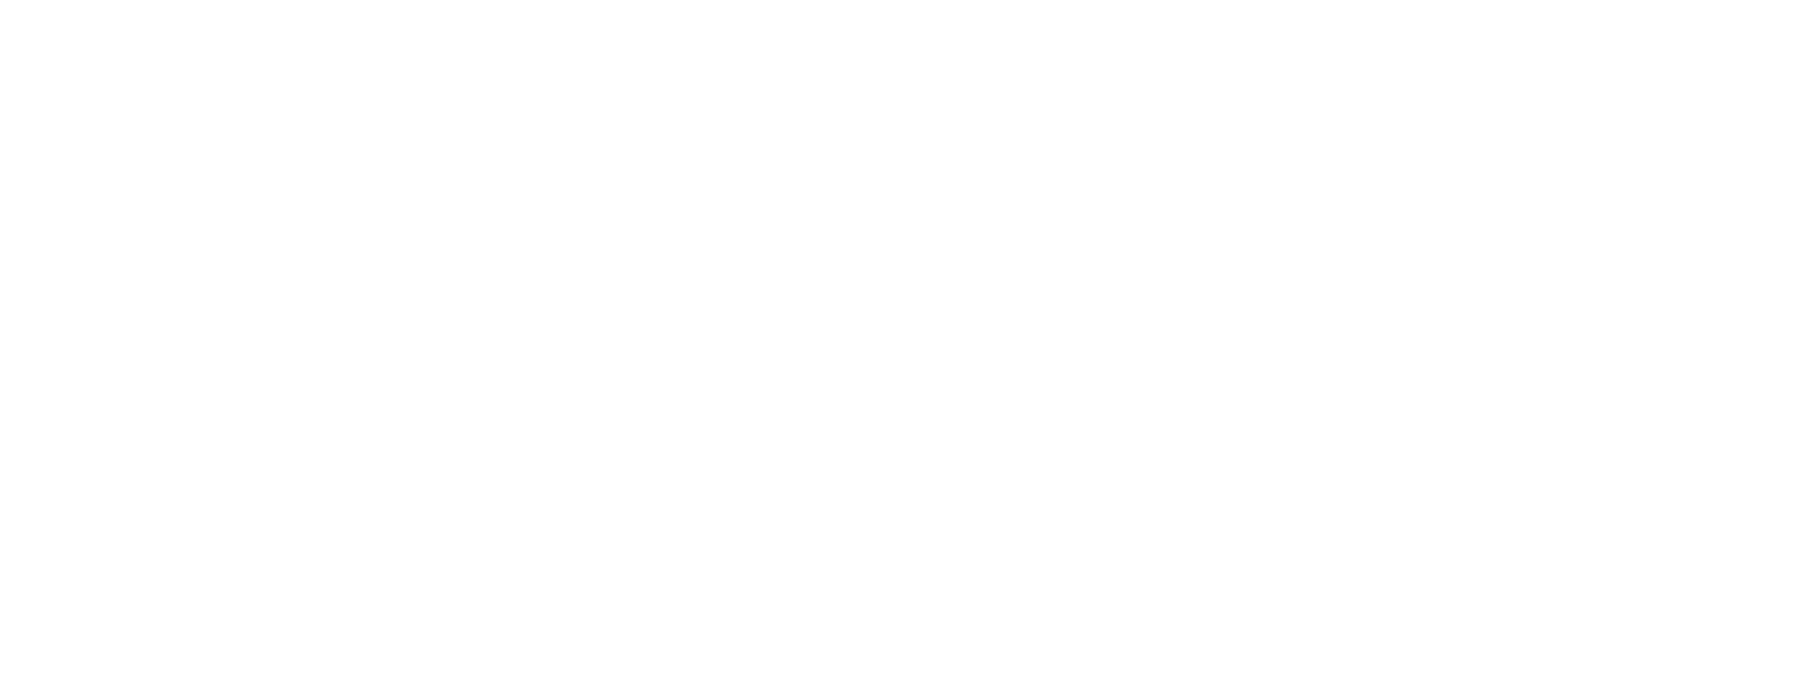 Dj Judgement